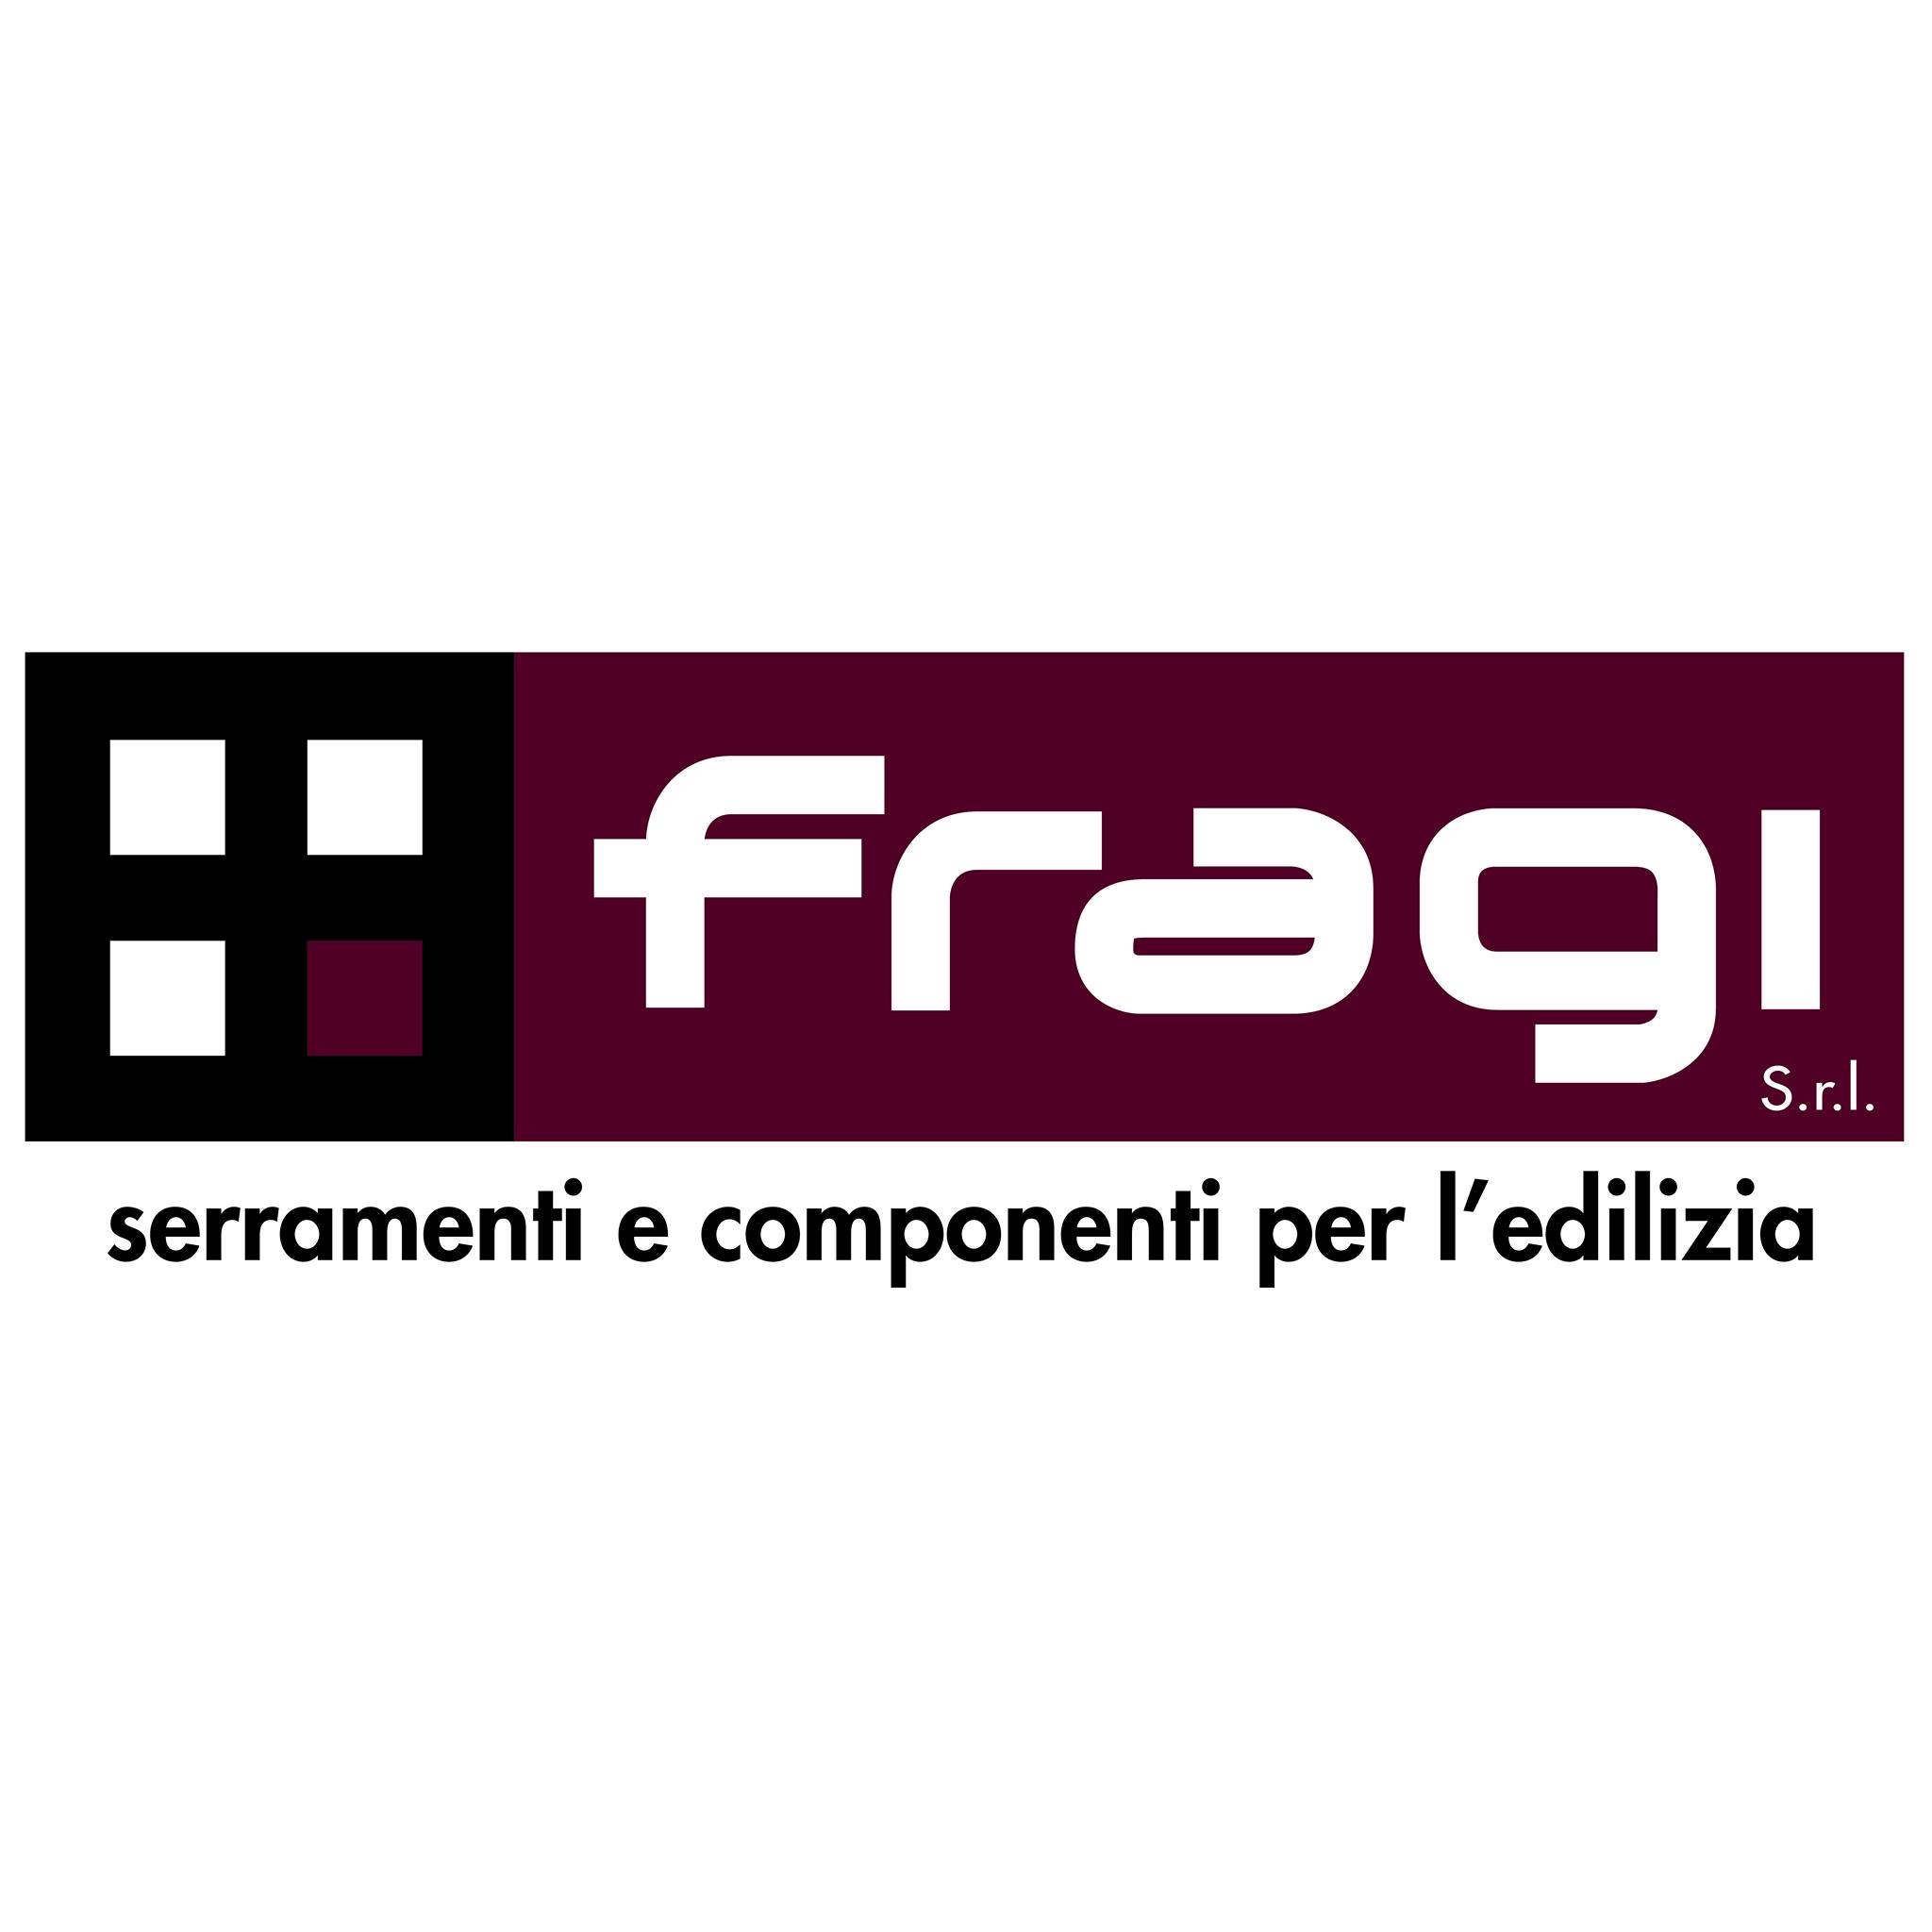 fragi-serramenti_logo